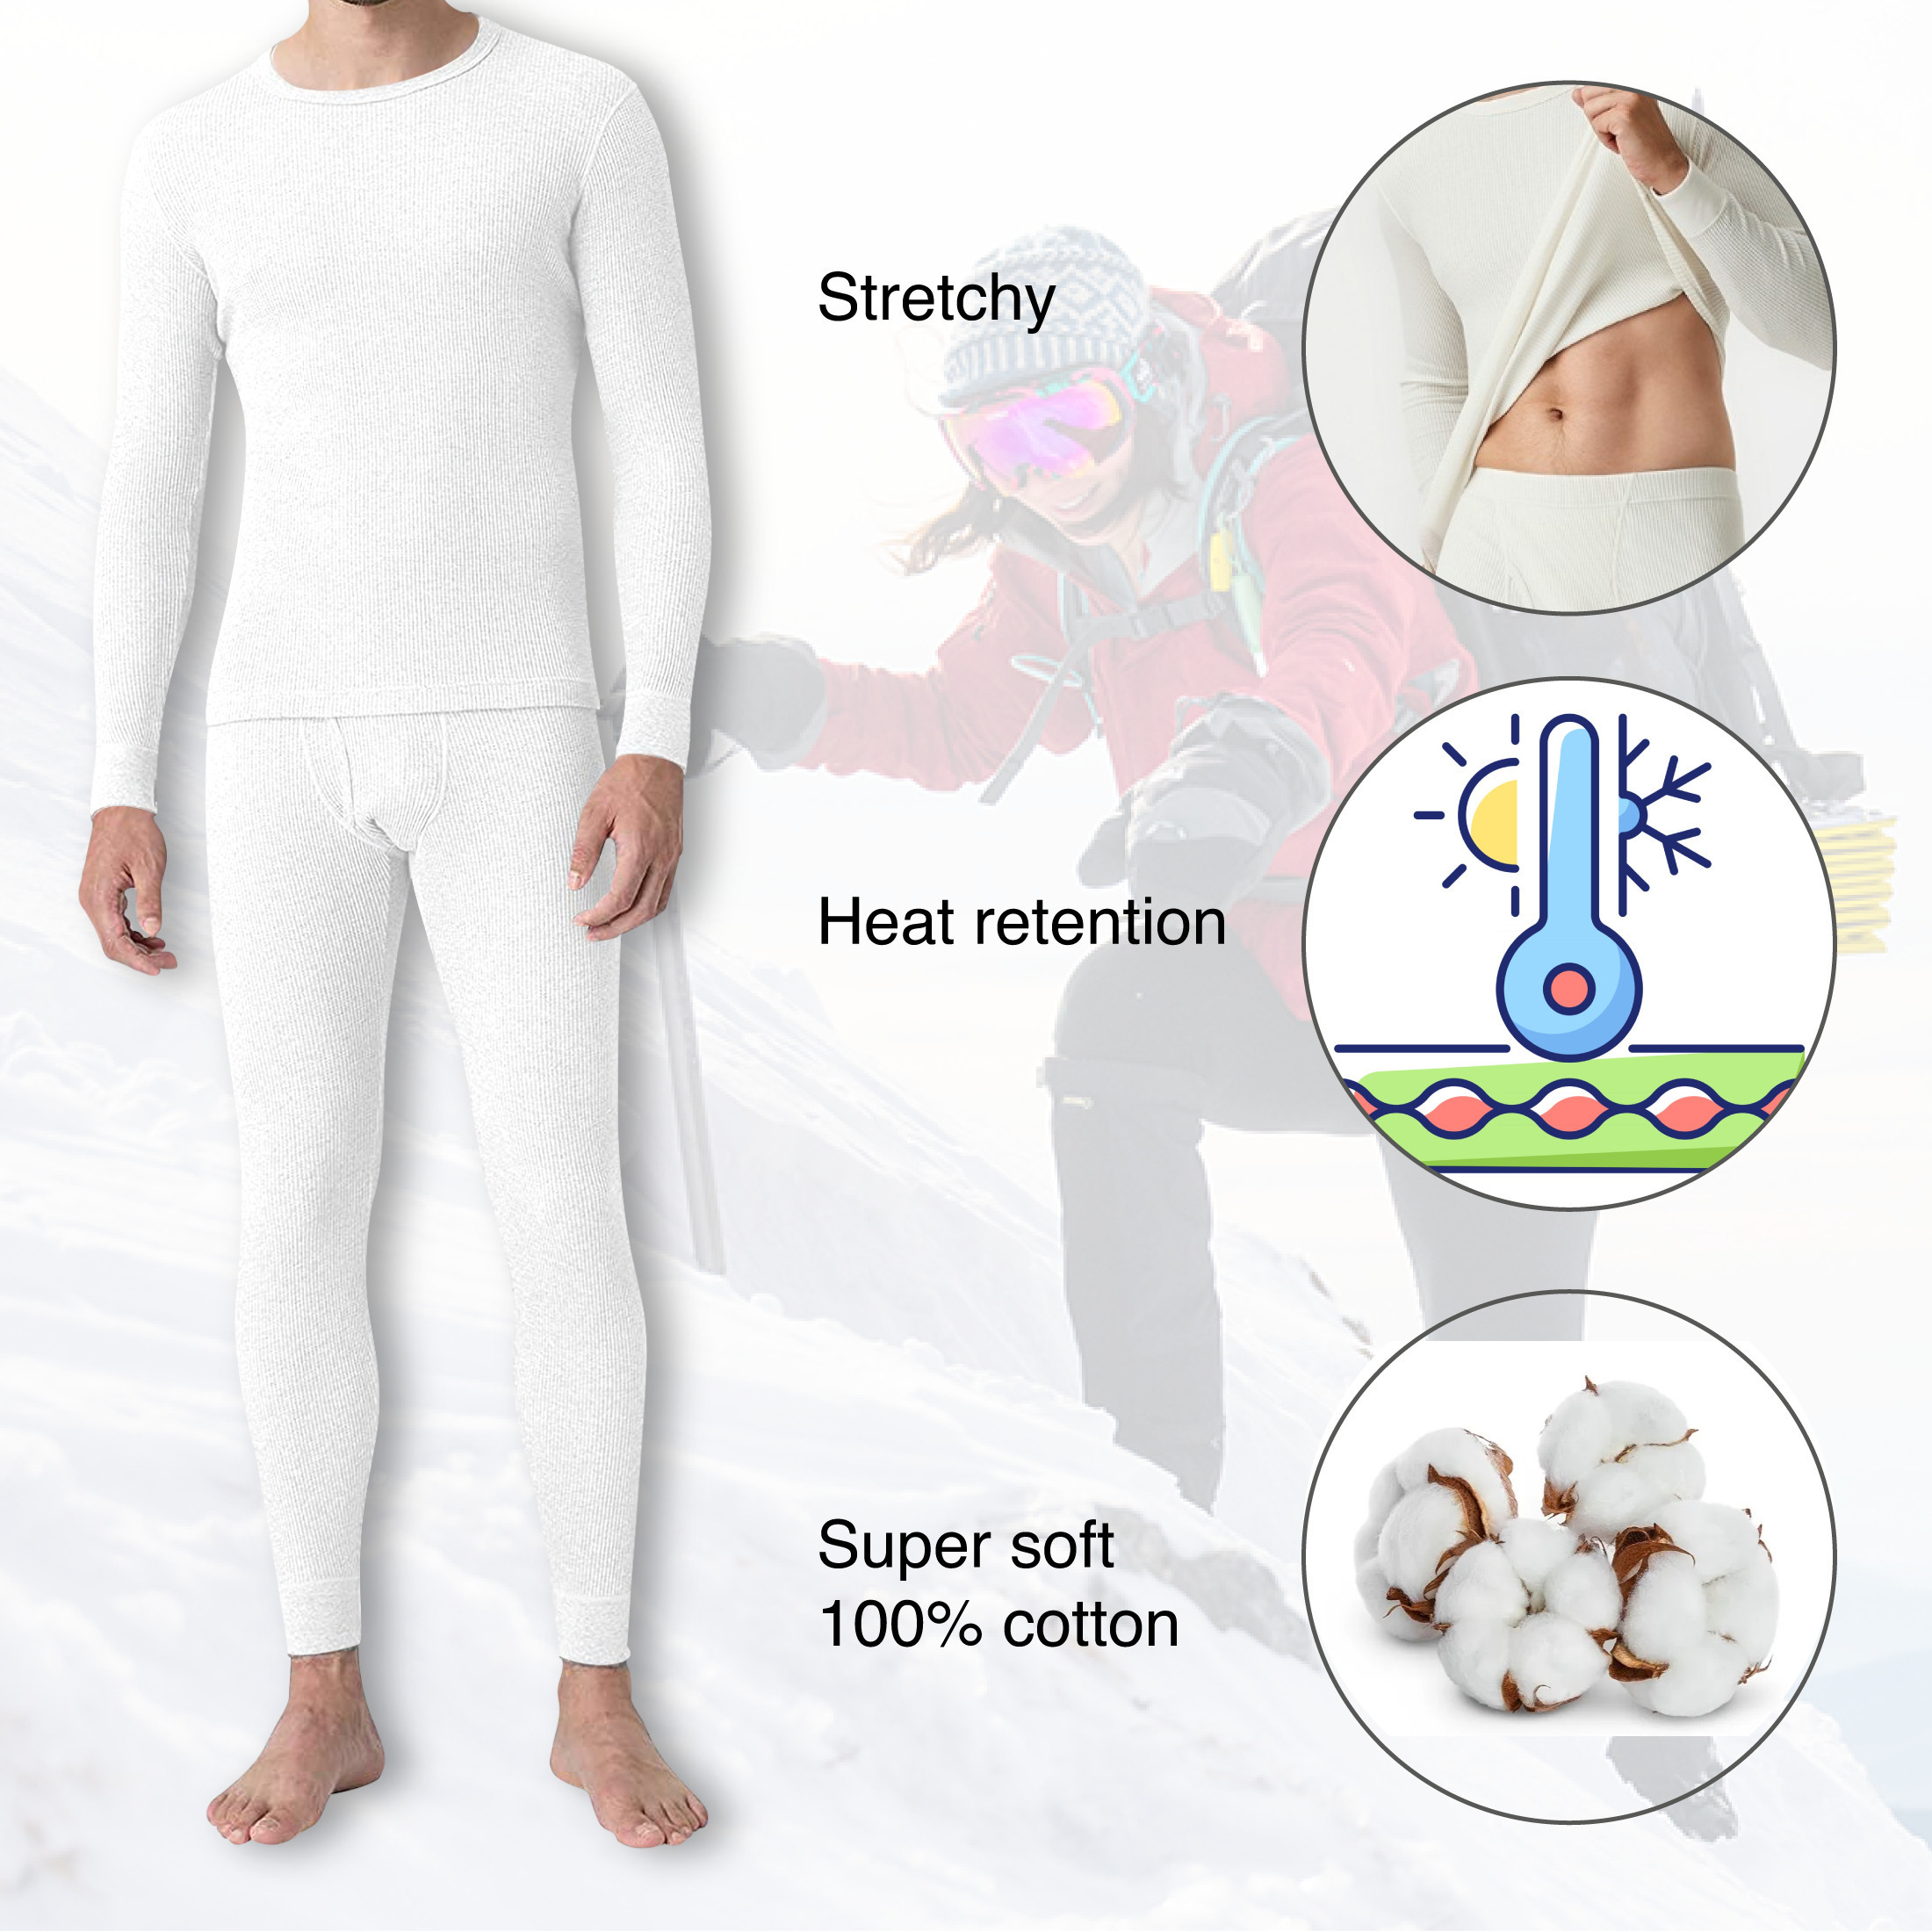 2-Sets: Men's Super Soft Cotton Waffle Knit Winter Thermal Underwear Set - Navy & Navy, Medium